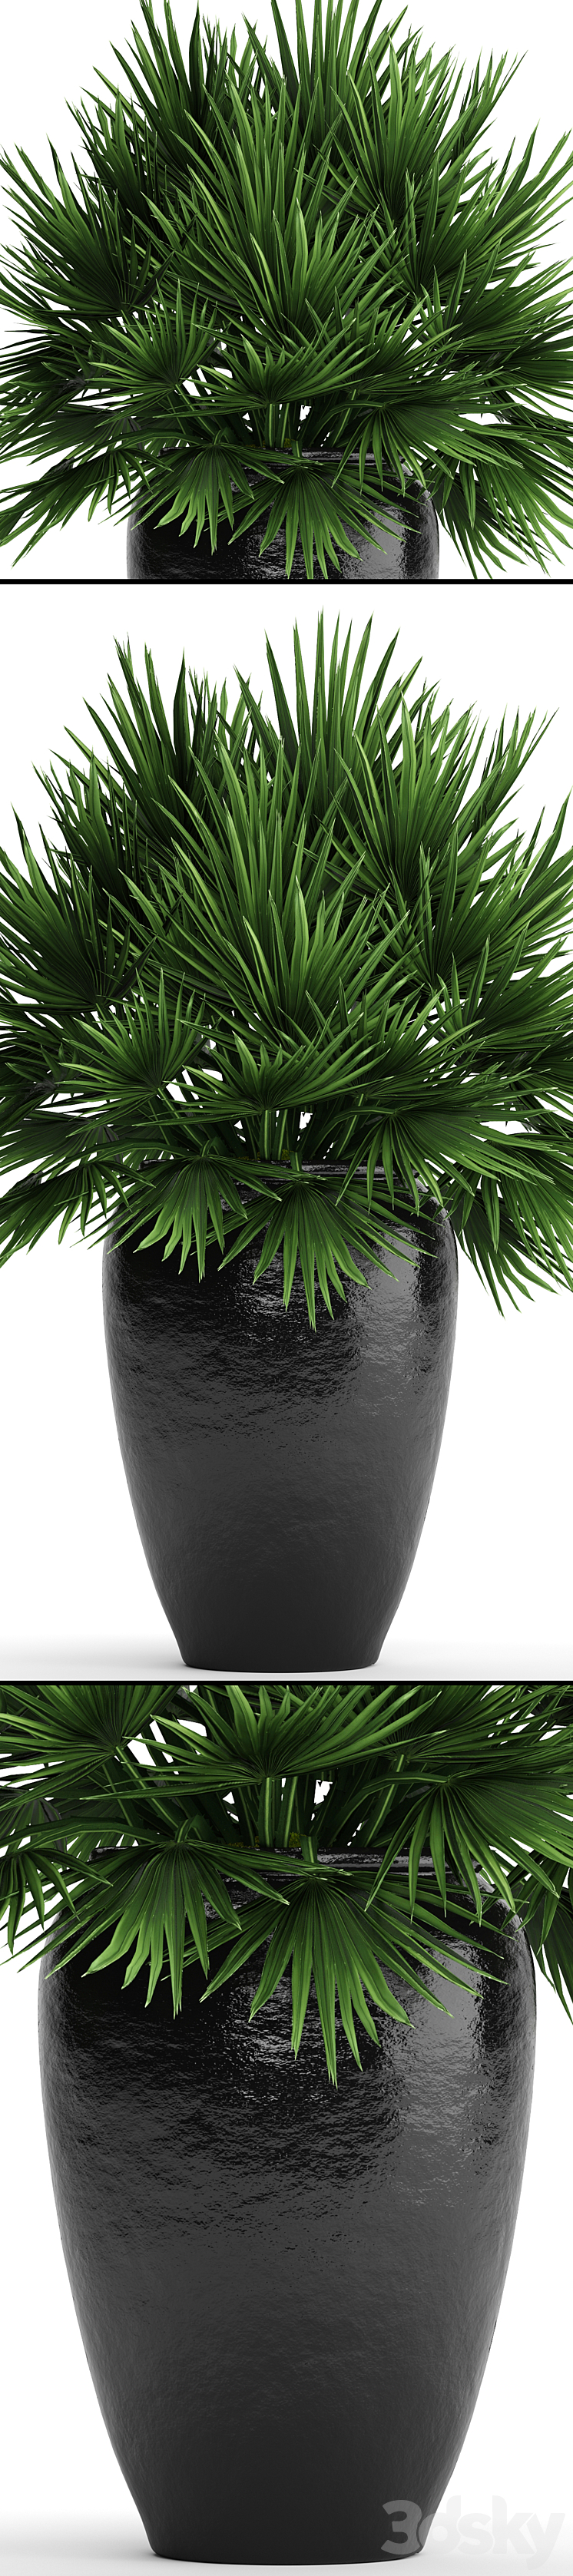 Chamaerops palm Chamaerops palm tree bush pot flowerpot outdoor decorative interior 3DS Max - thumbnail 2